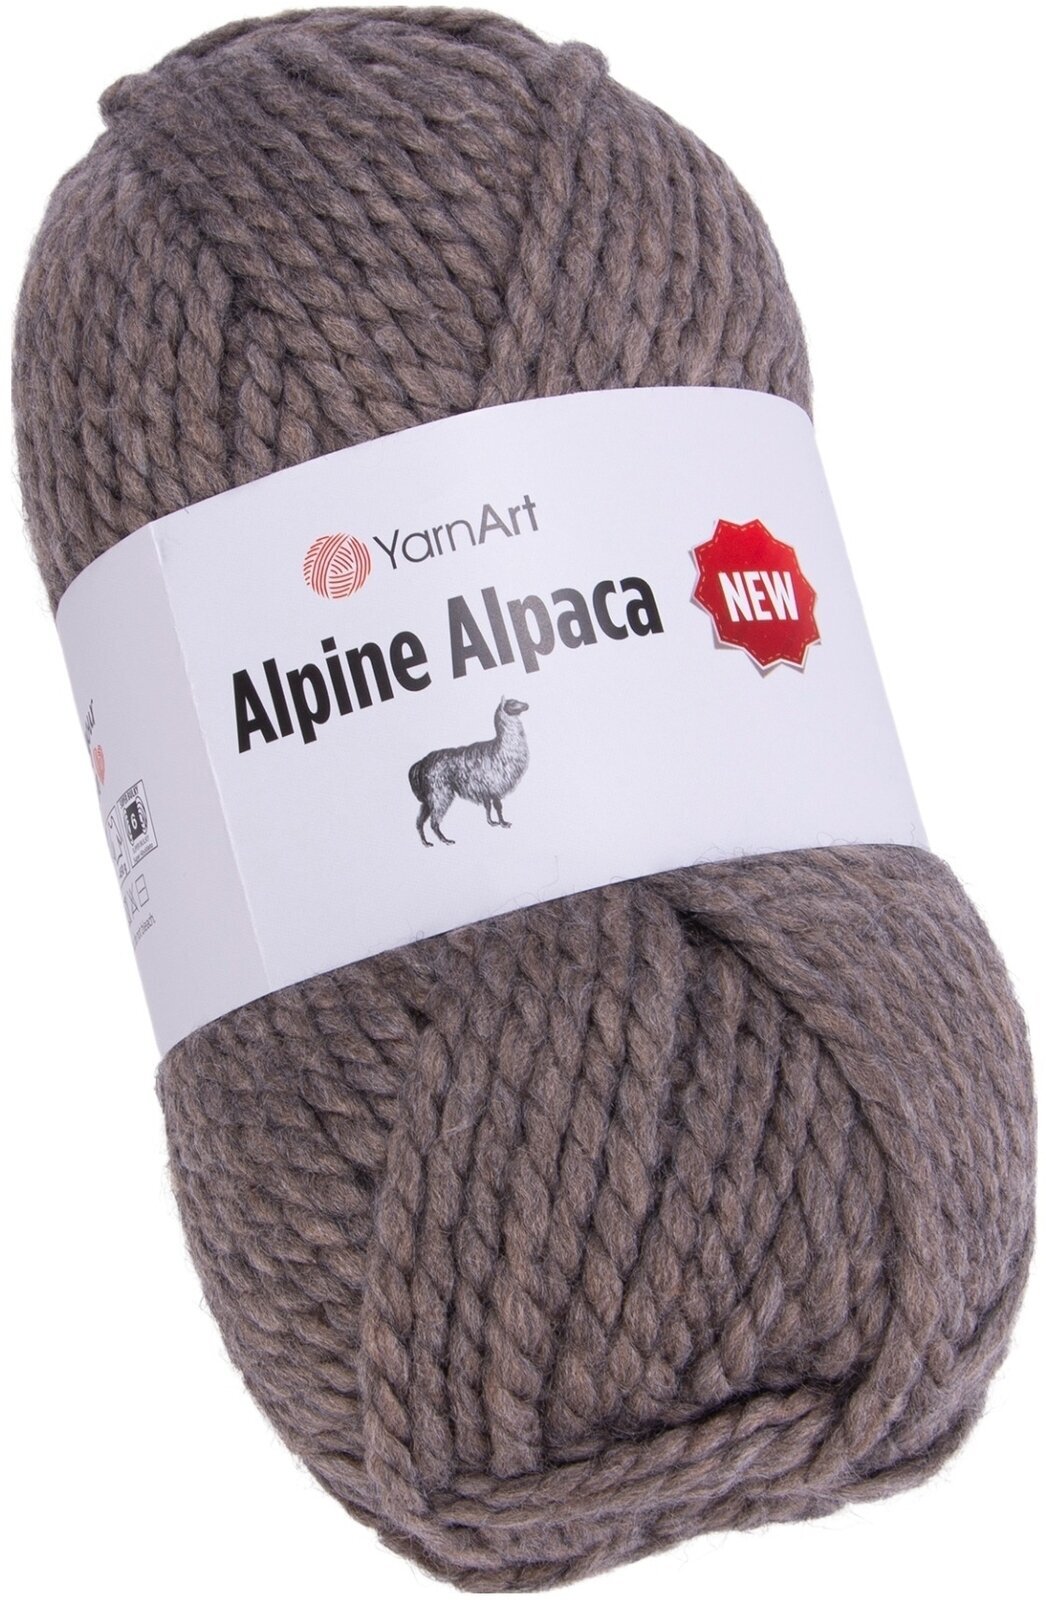 Strickgarn Yarn Art Alpine Alpaca 1438